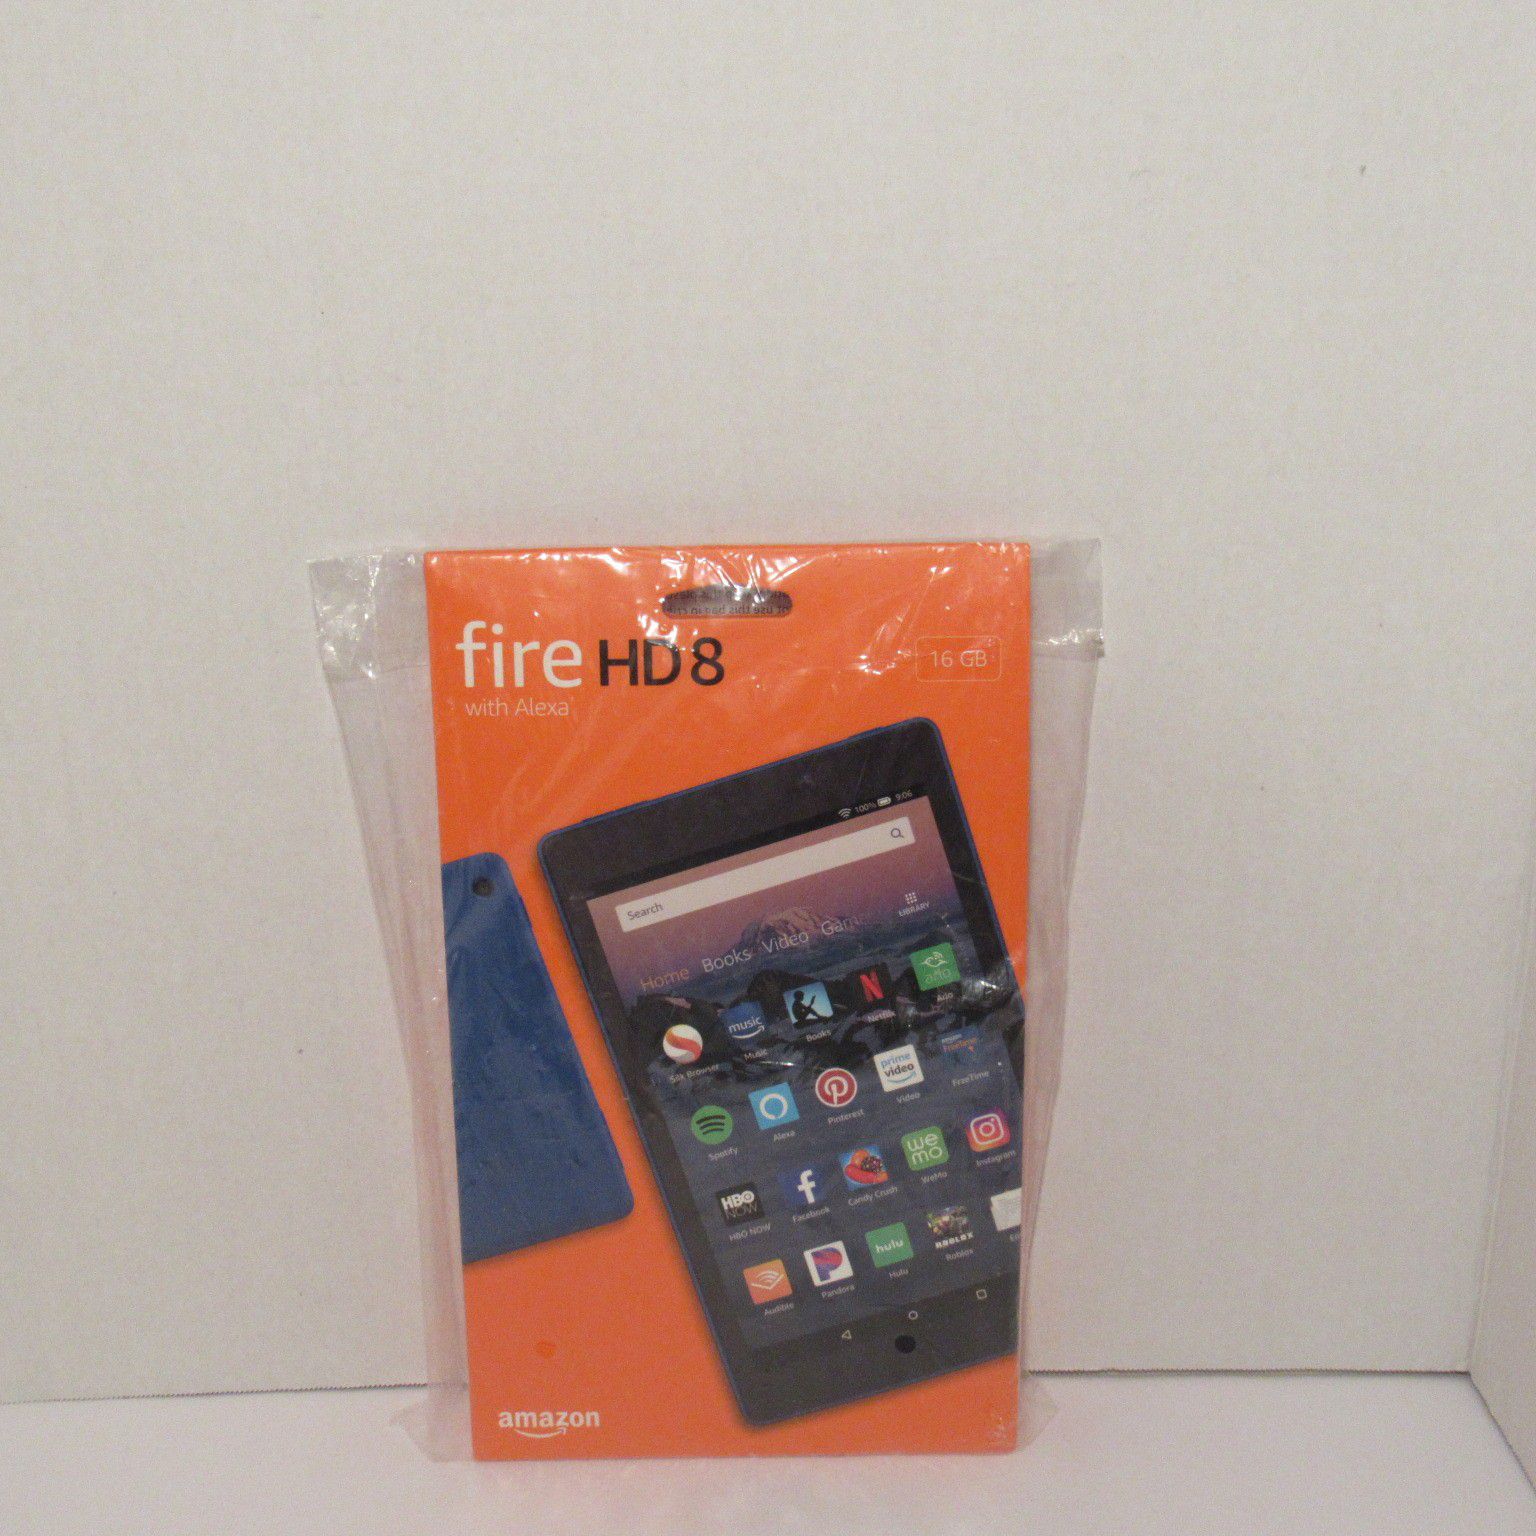 Amazon Fire HD 8 w/Alexa, 16 GB Tablet